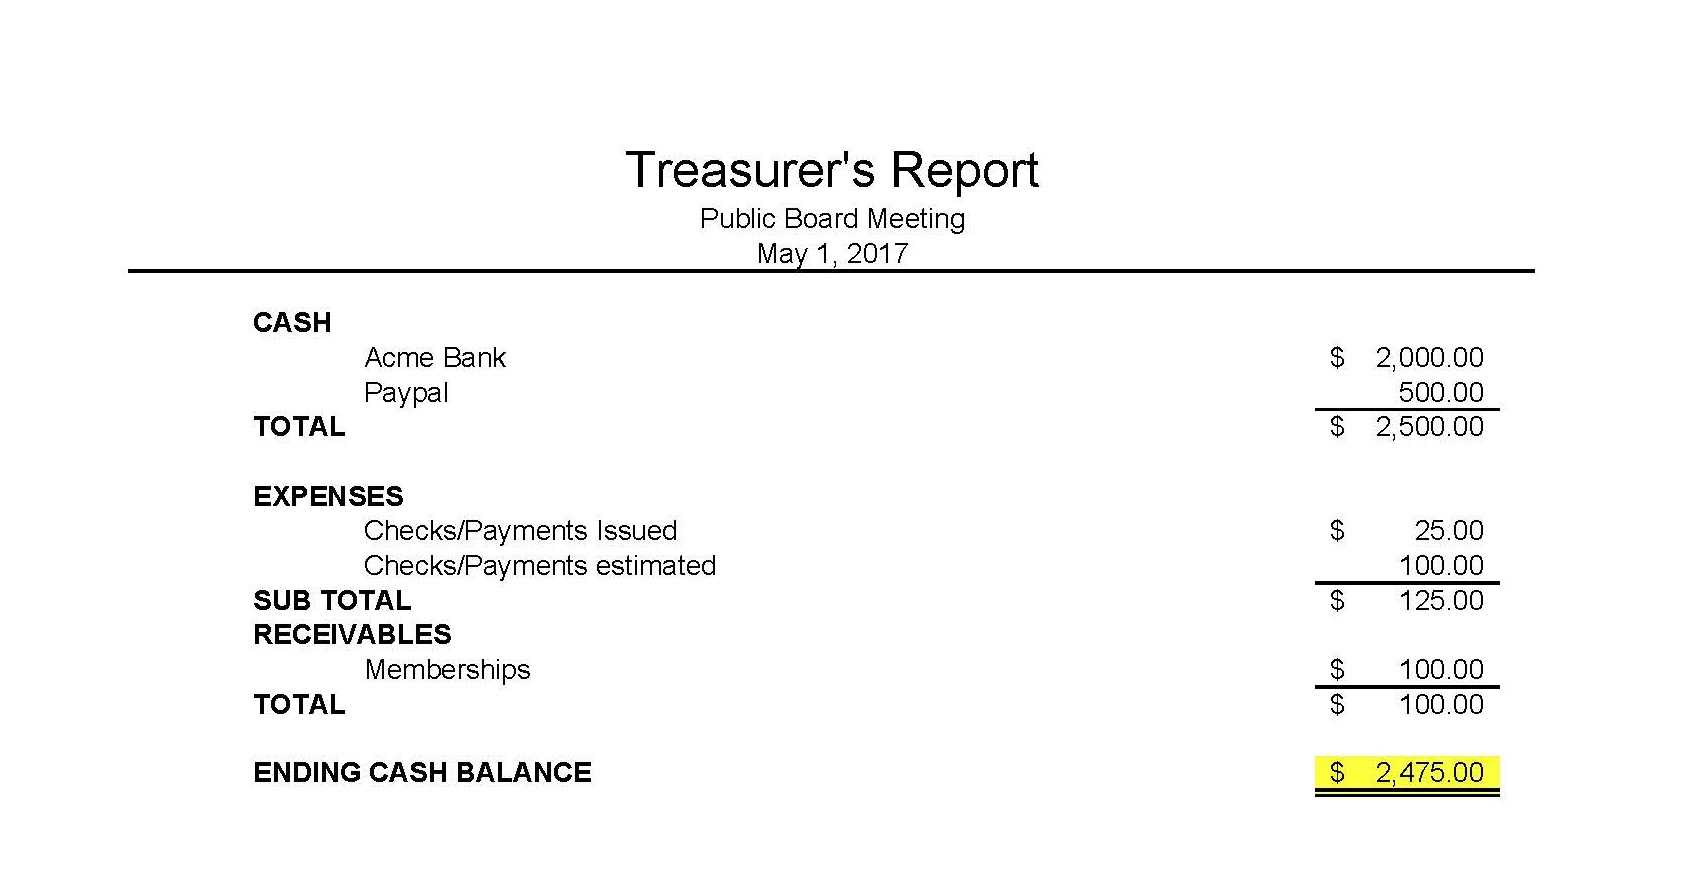 Treasurer Report Template Google Docs Intended For Treasurer's Report Agm Template